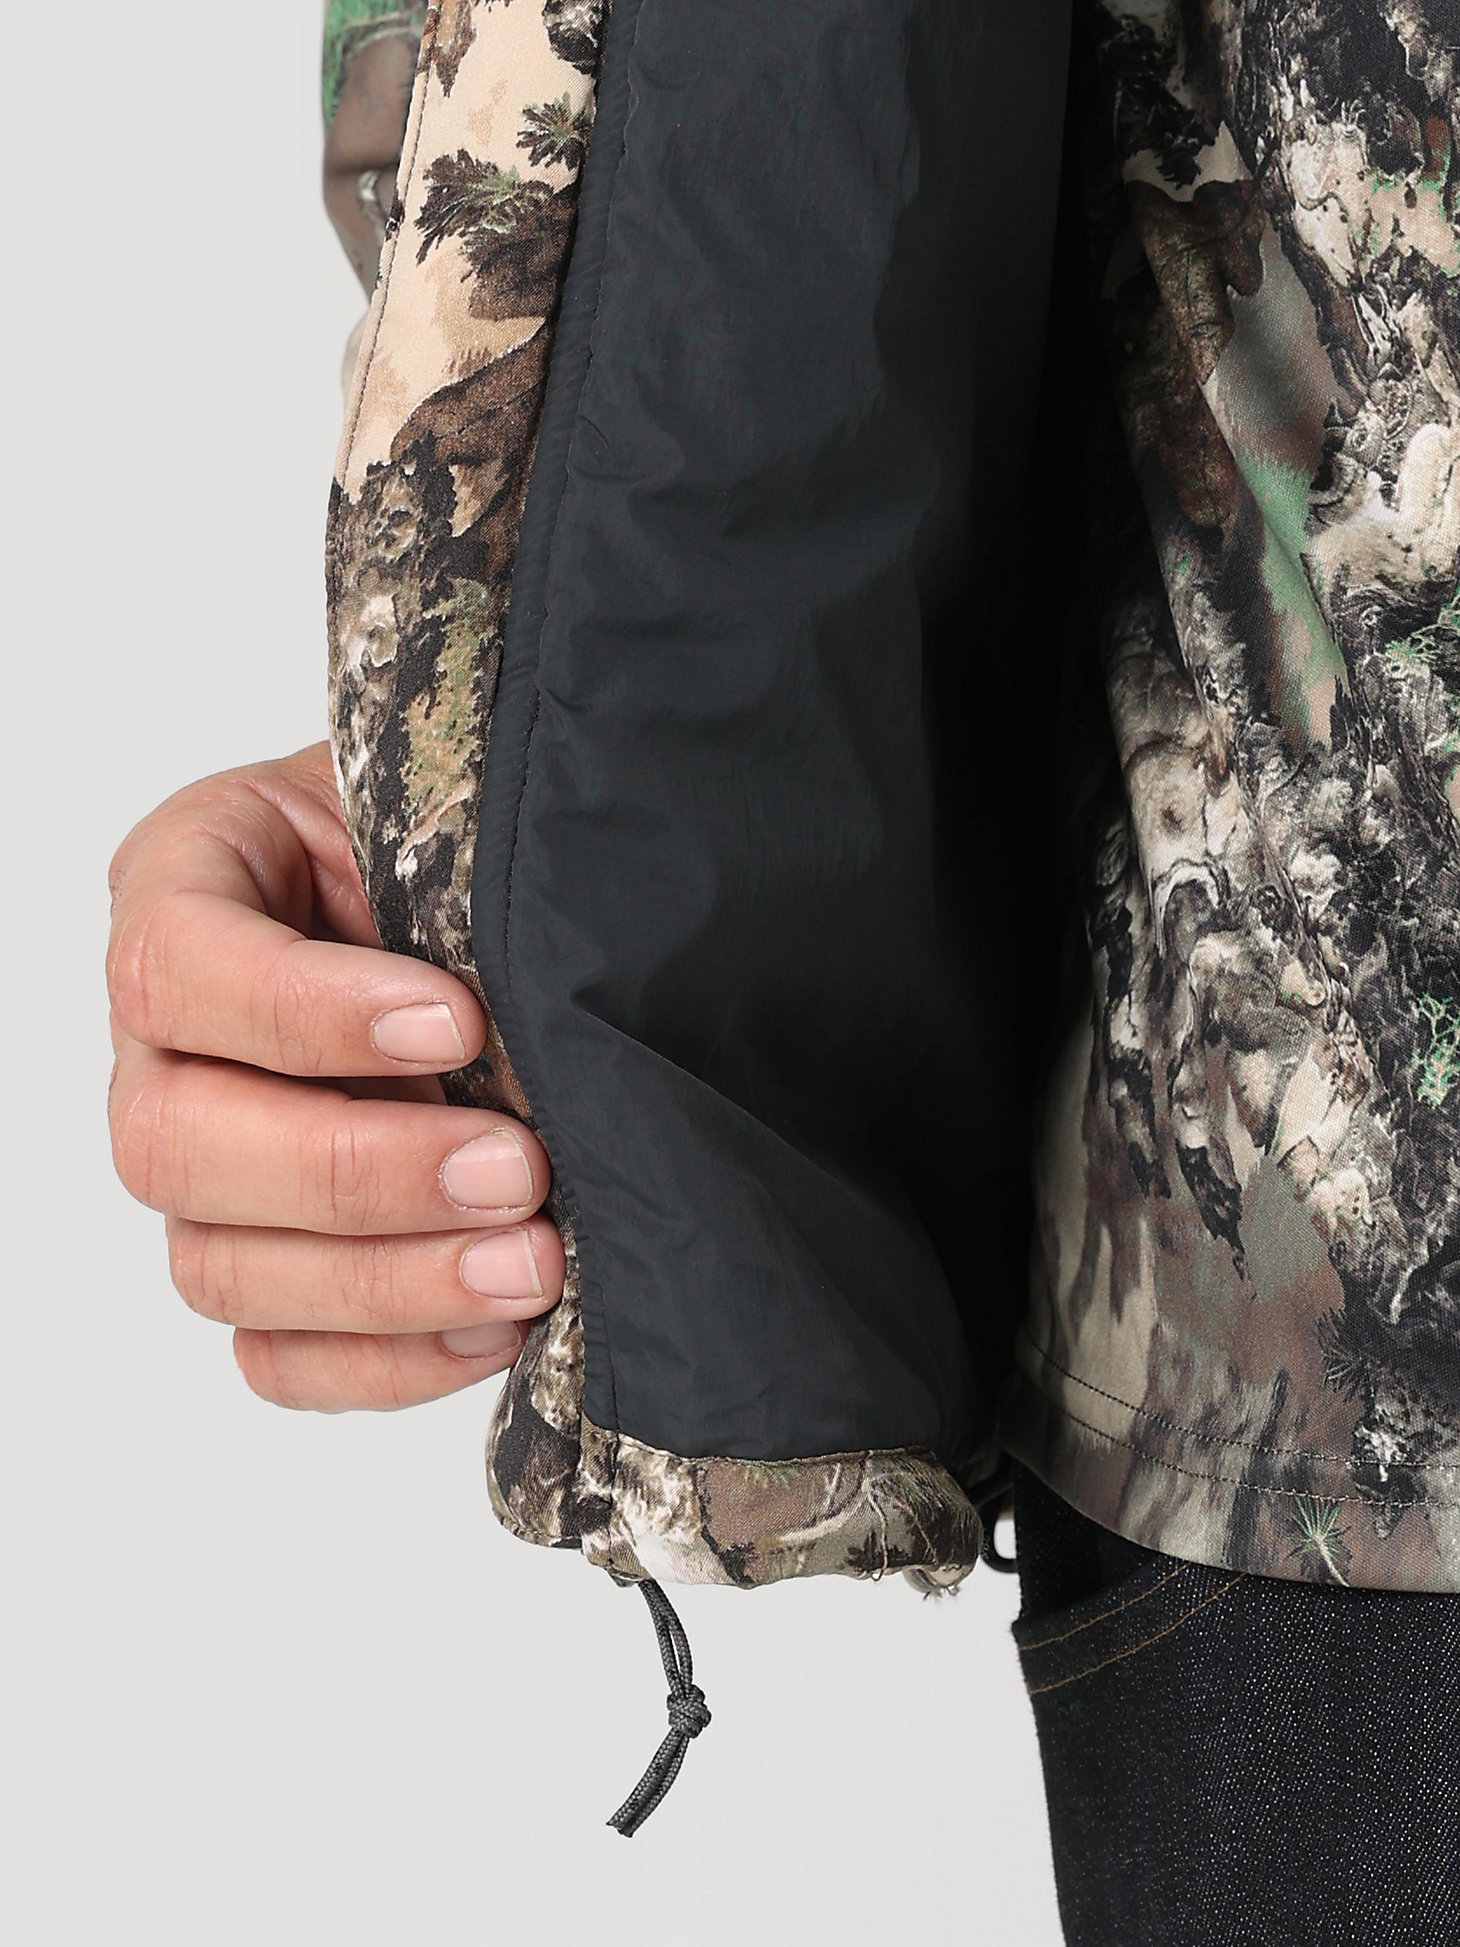 ATG Hunter™ Men's Mid Layer Vest in Warmwoods Camo alternative view 6